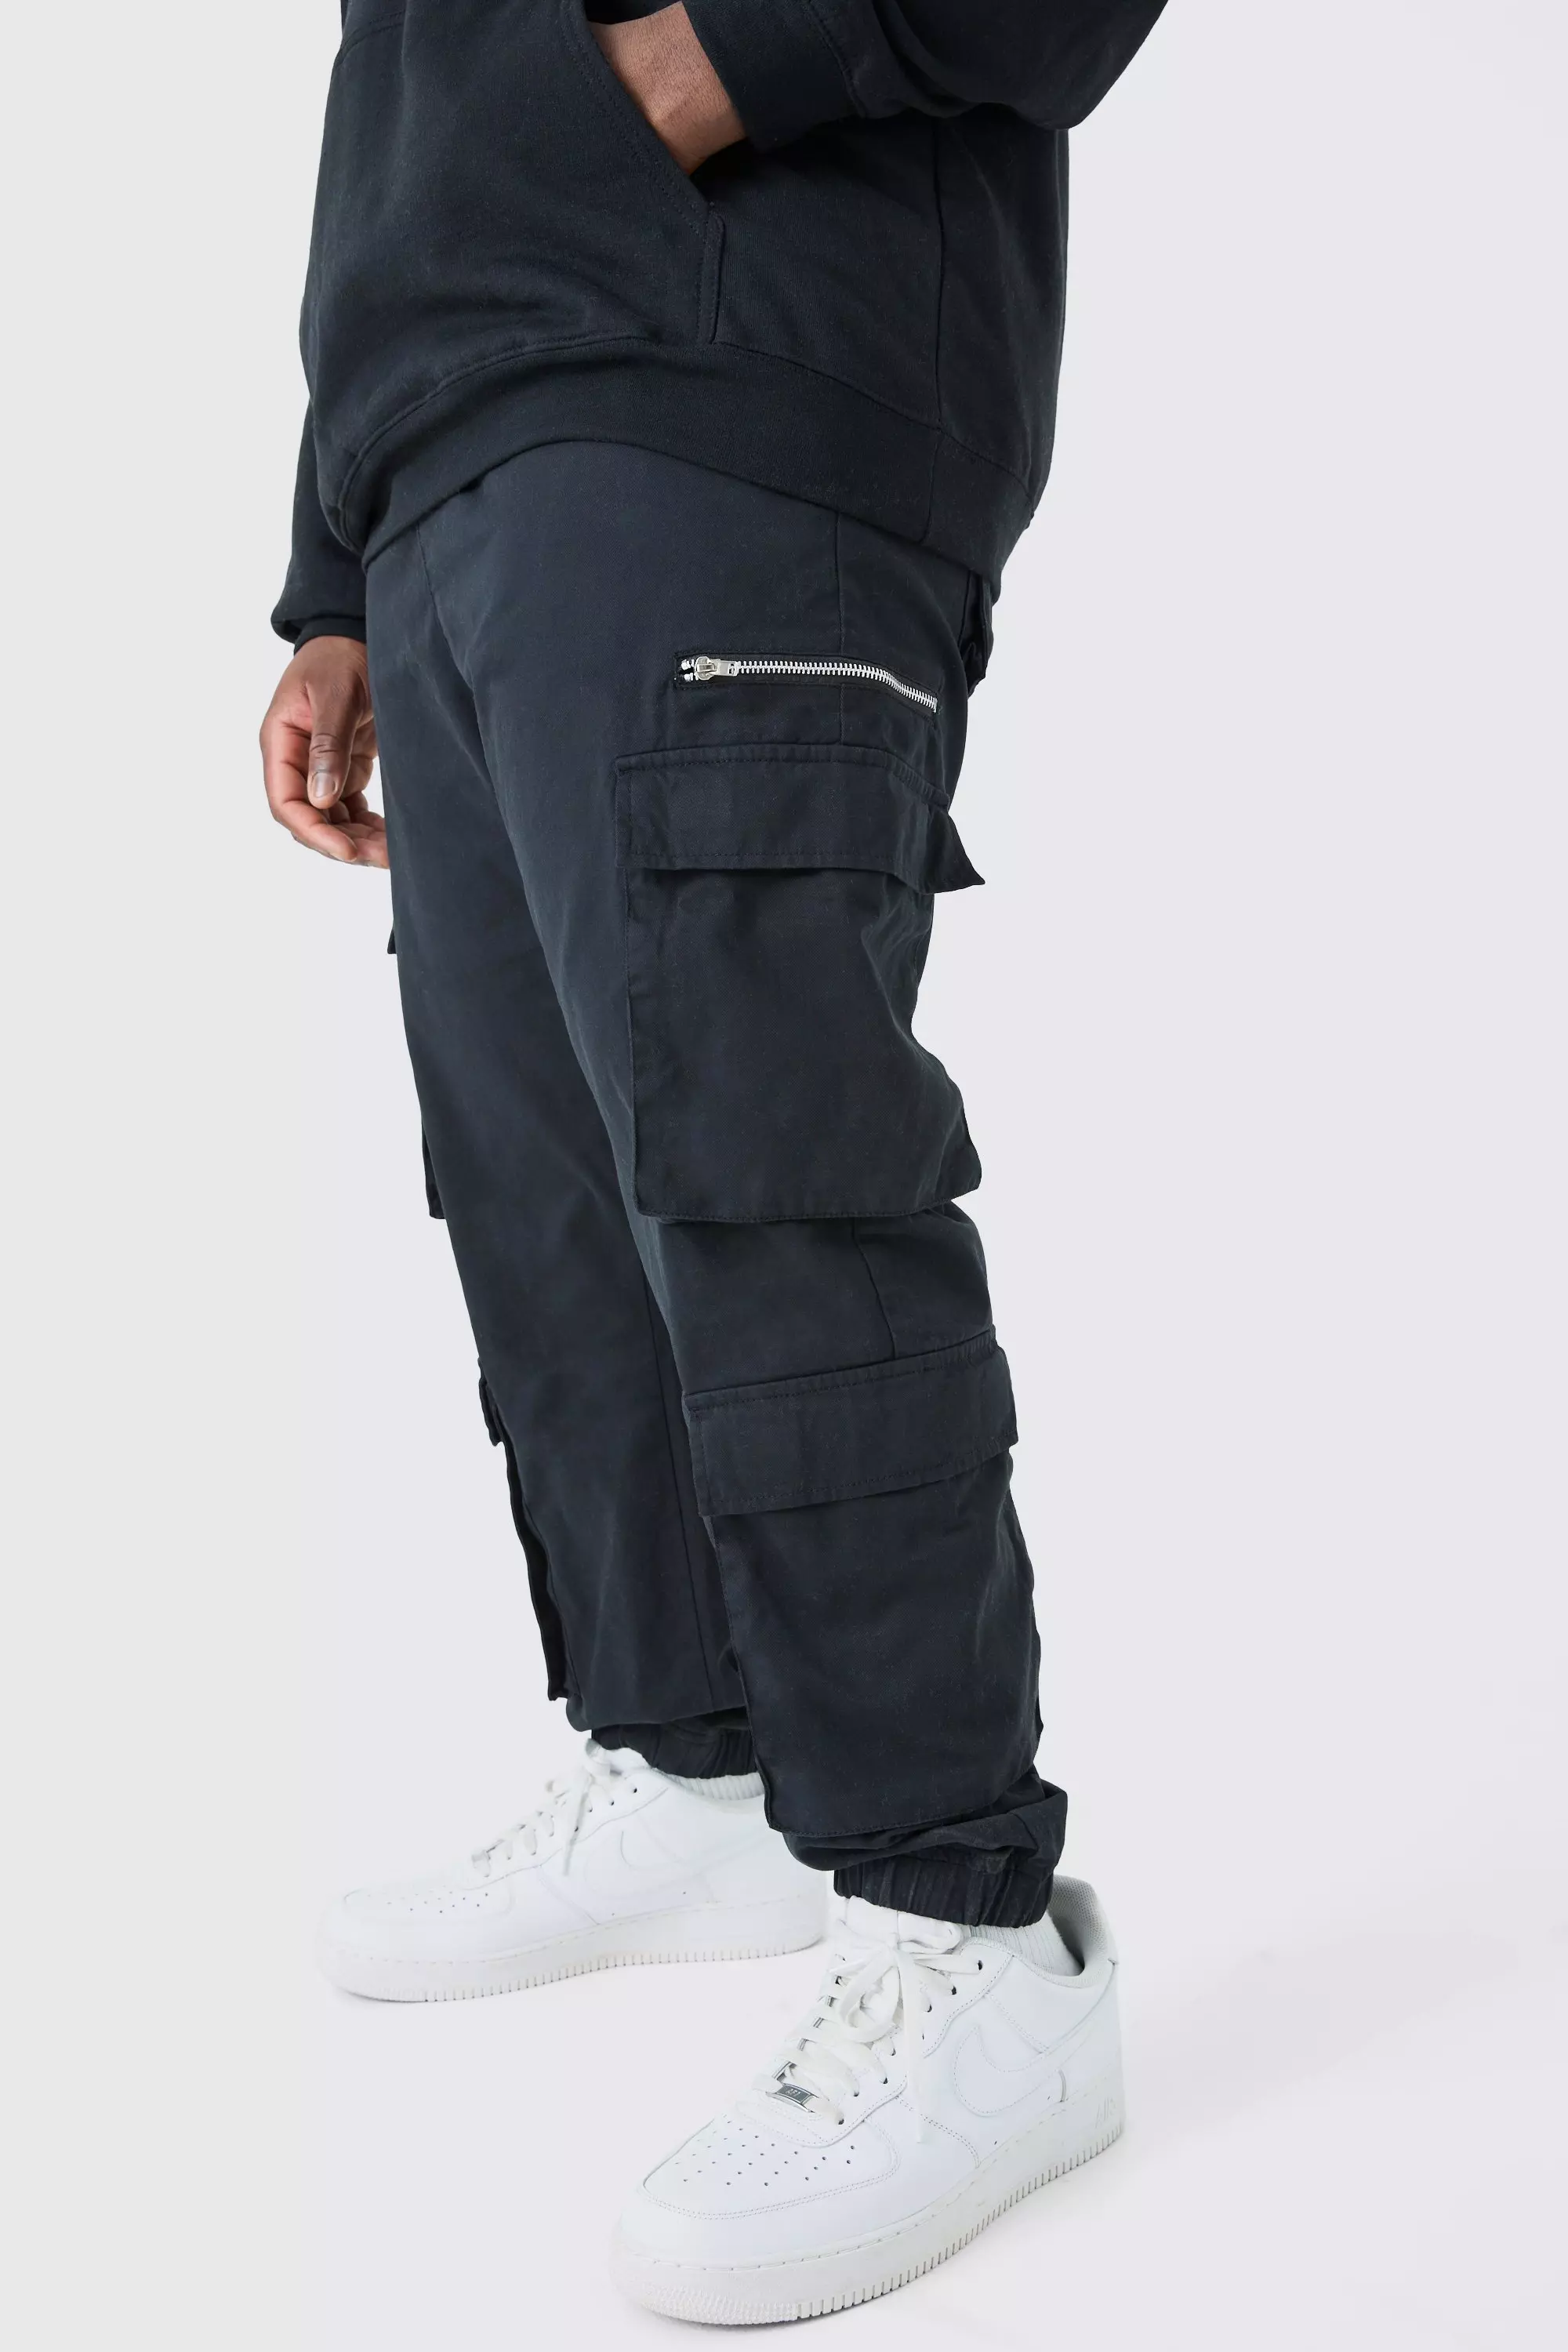 Black Contrast Stitch Carpenter Shirt and Cargo Pants Clothing Set